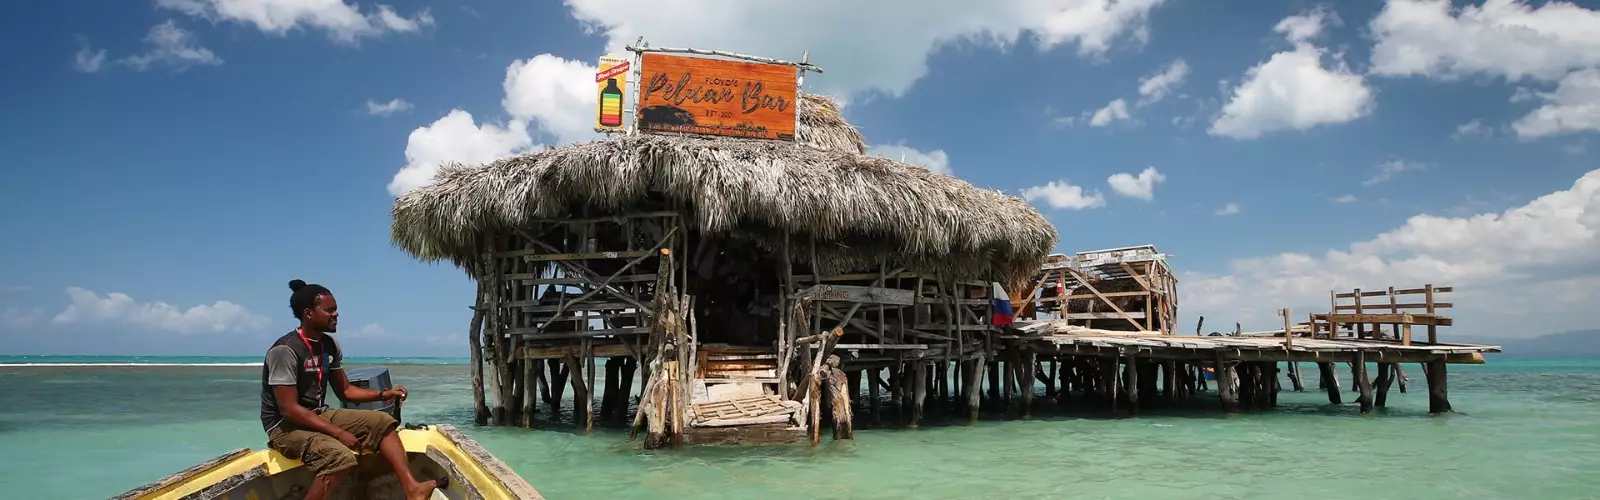 Floyd's Pelican Bar floats around a mile off Jamaica.